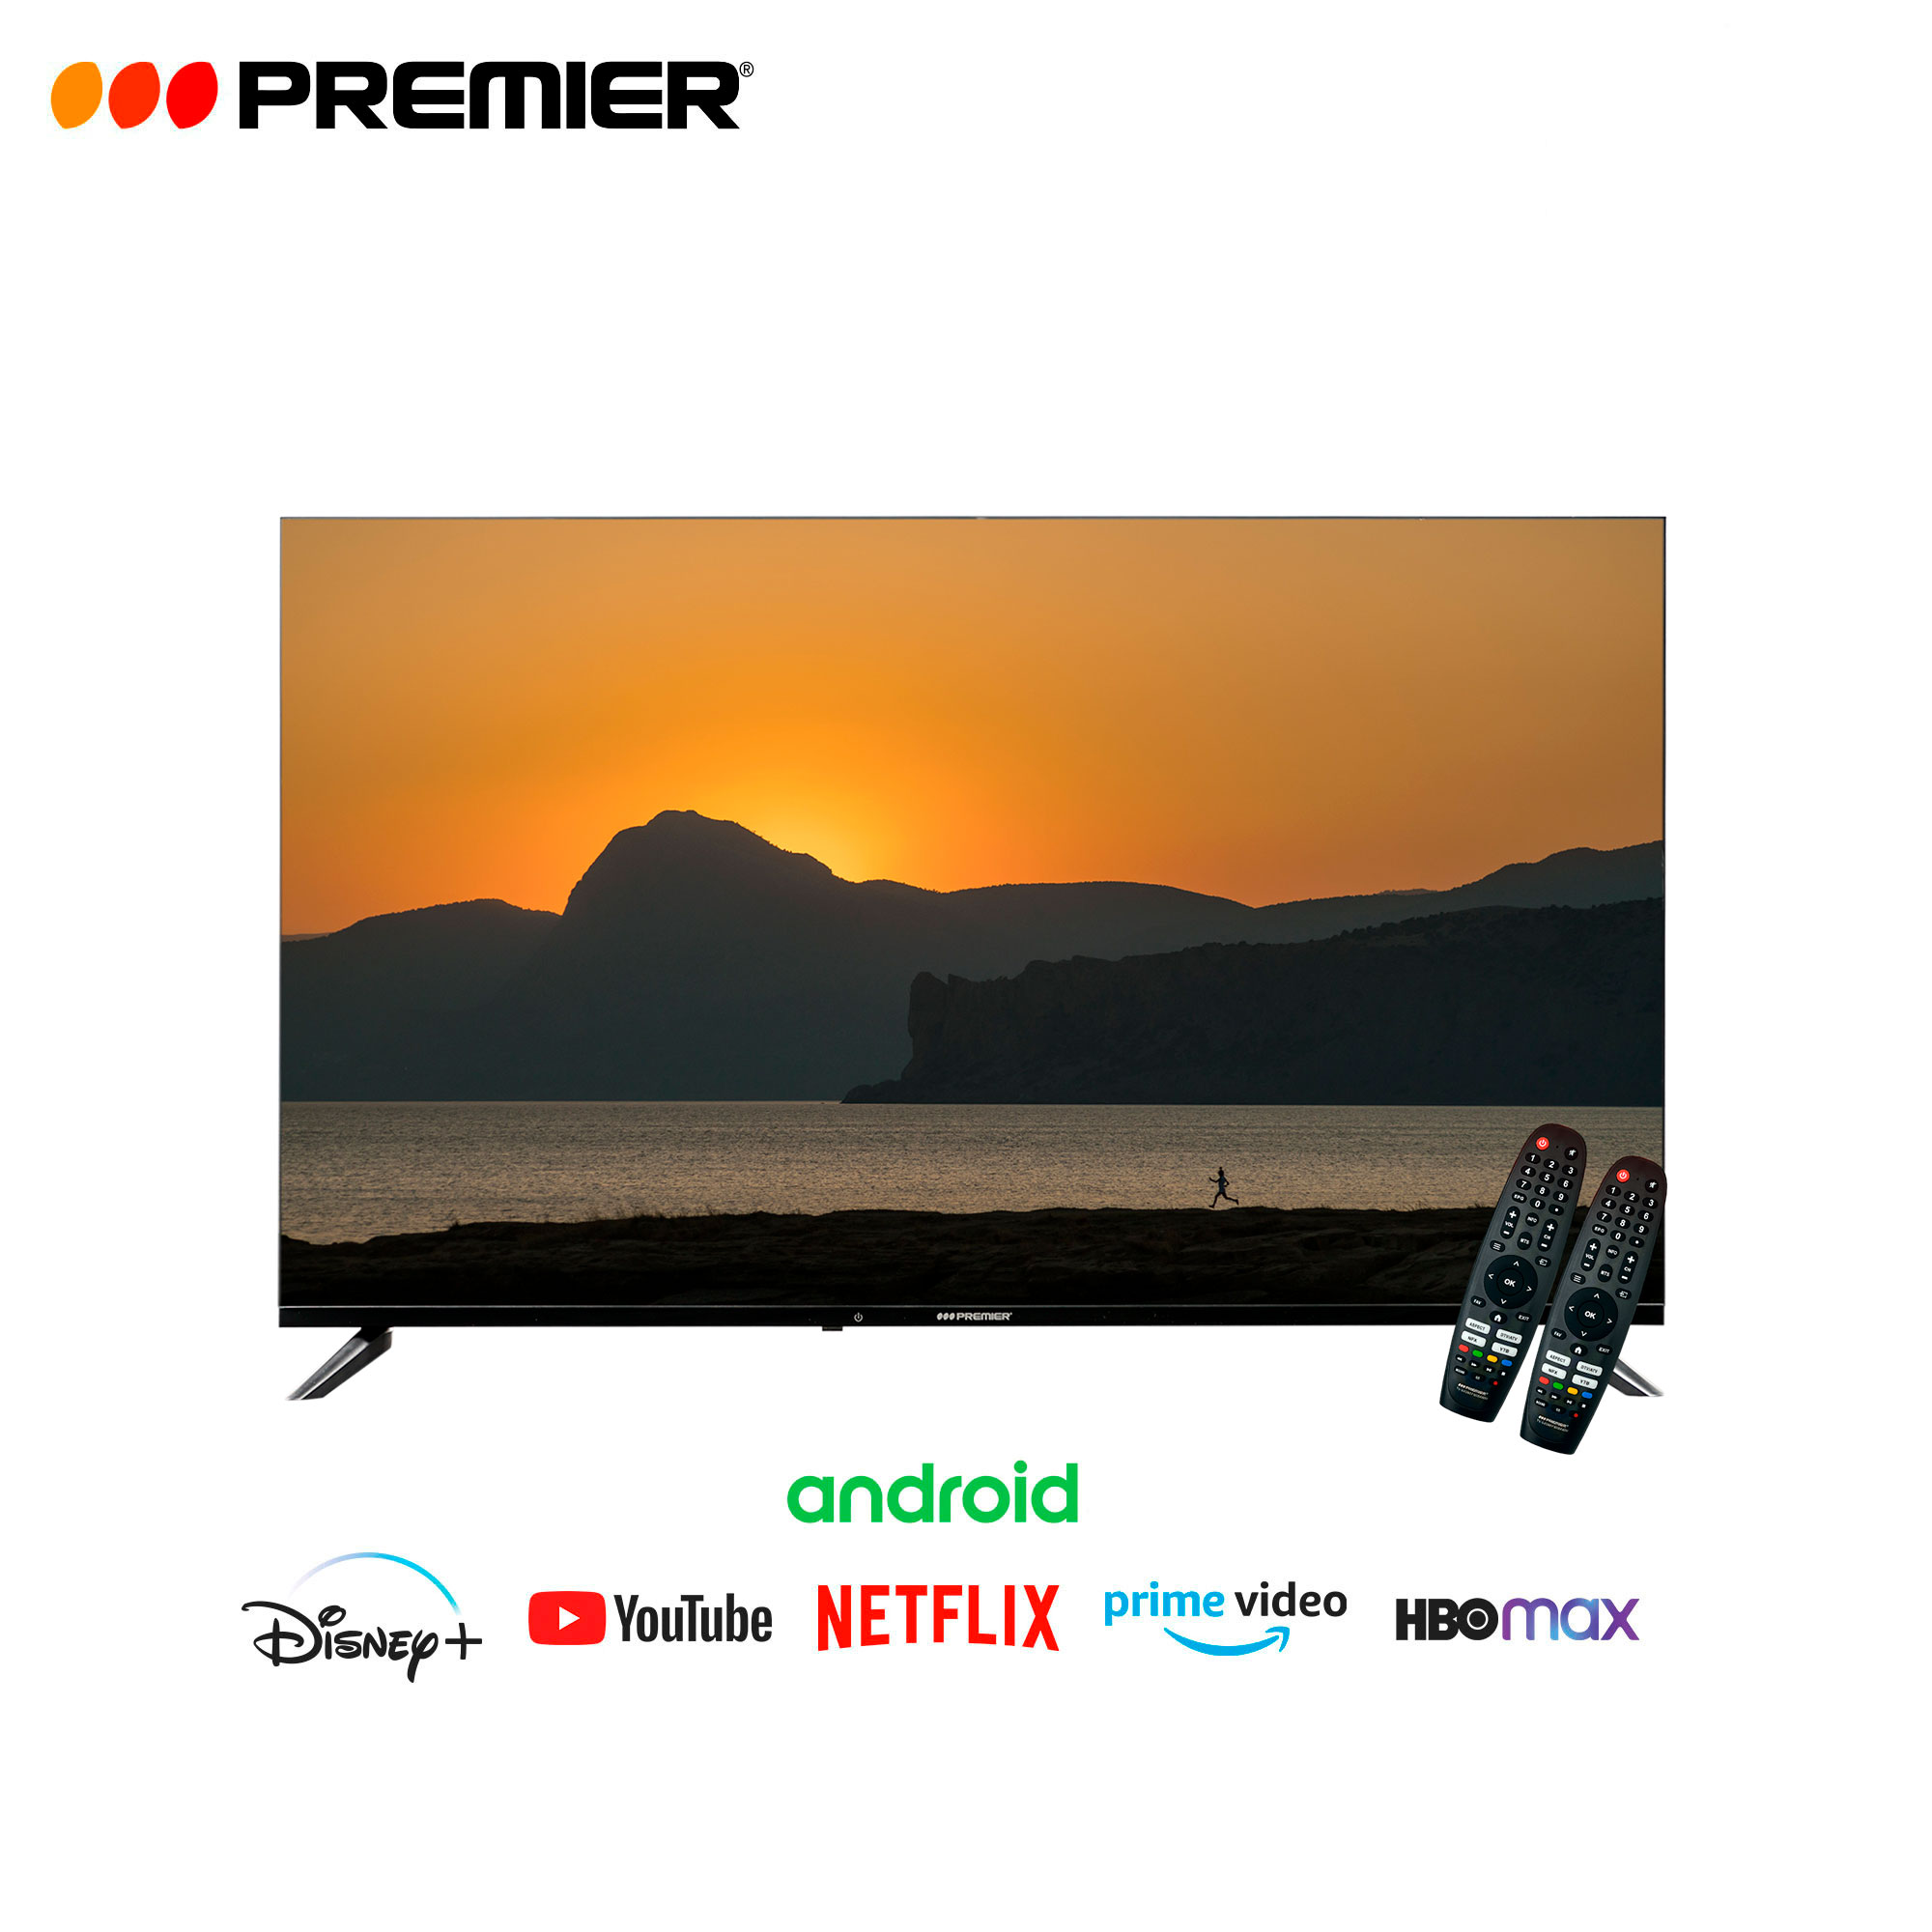 Productos Premier  Ultra HD Smart TV de 50